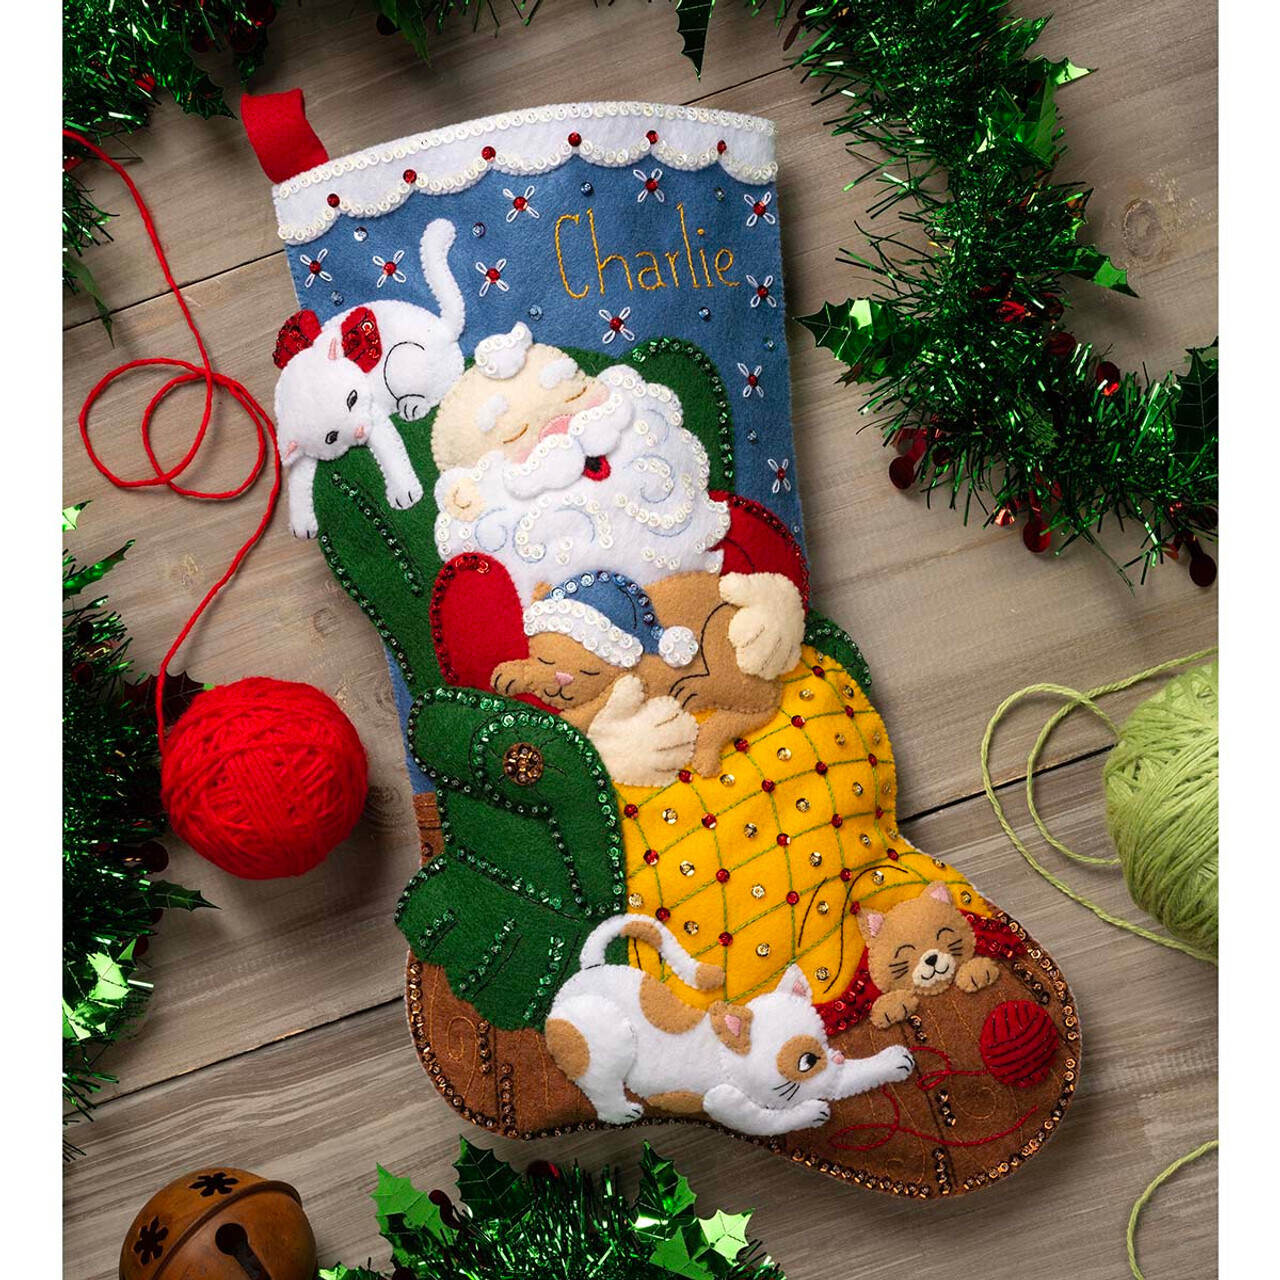 Bucilla Felt Applique Christmas Stocking Kit: Golfing Santa